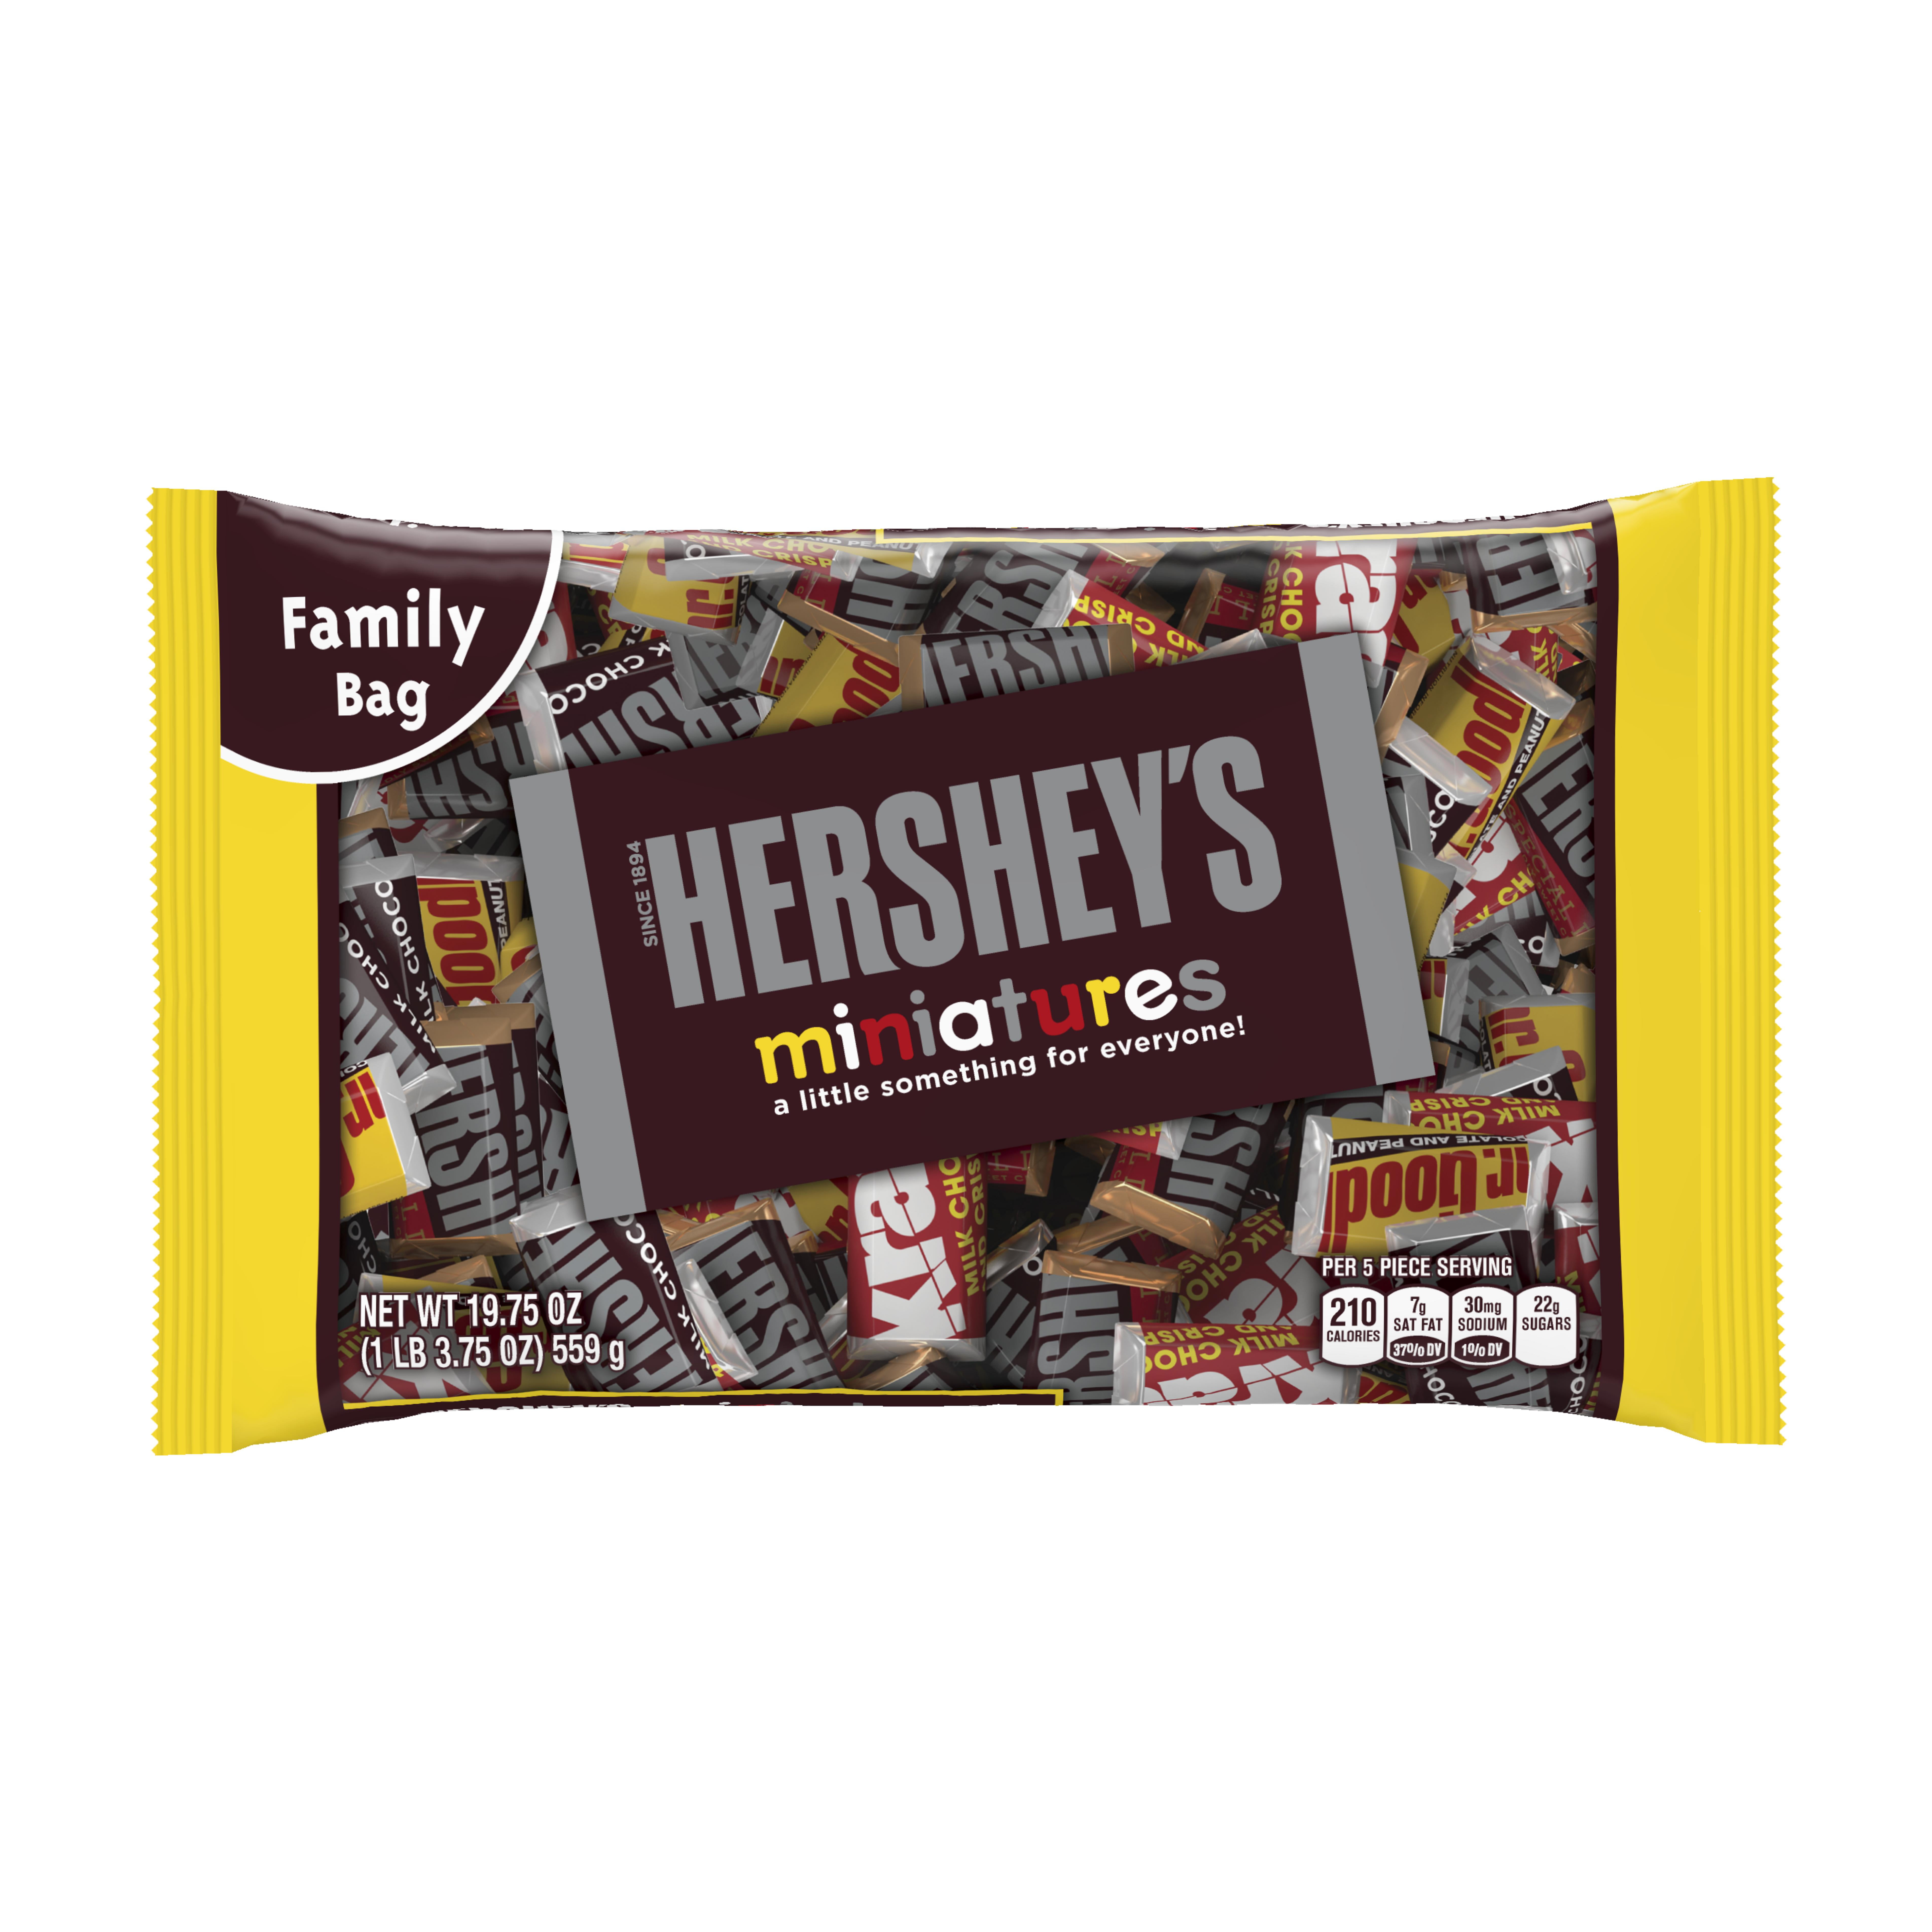 HERSHEY'S Miniatures Assortment 10.4oz Candy Bag